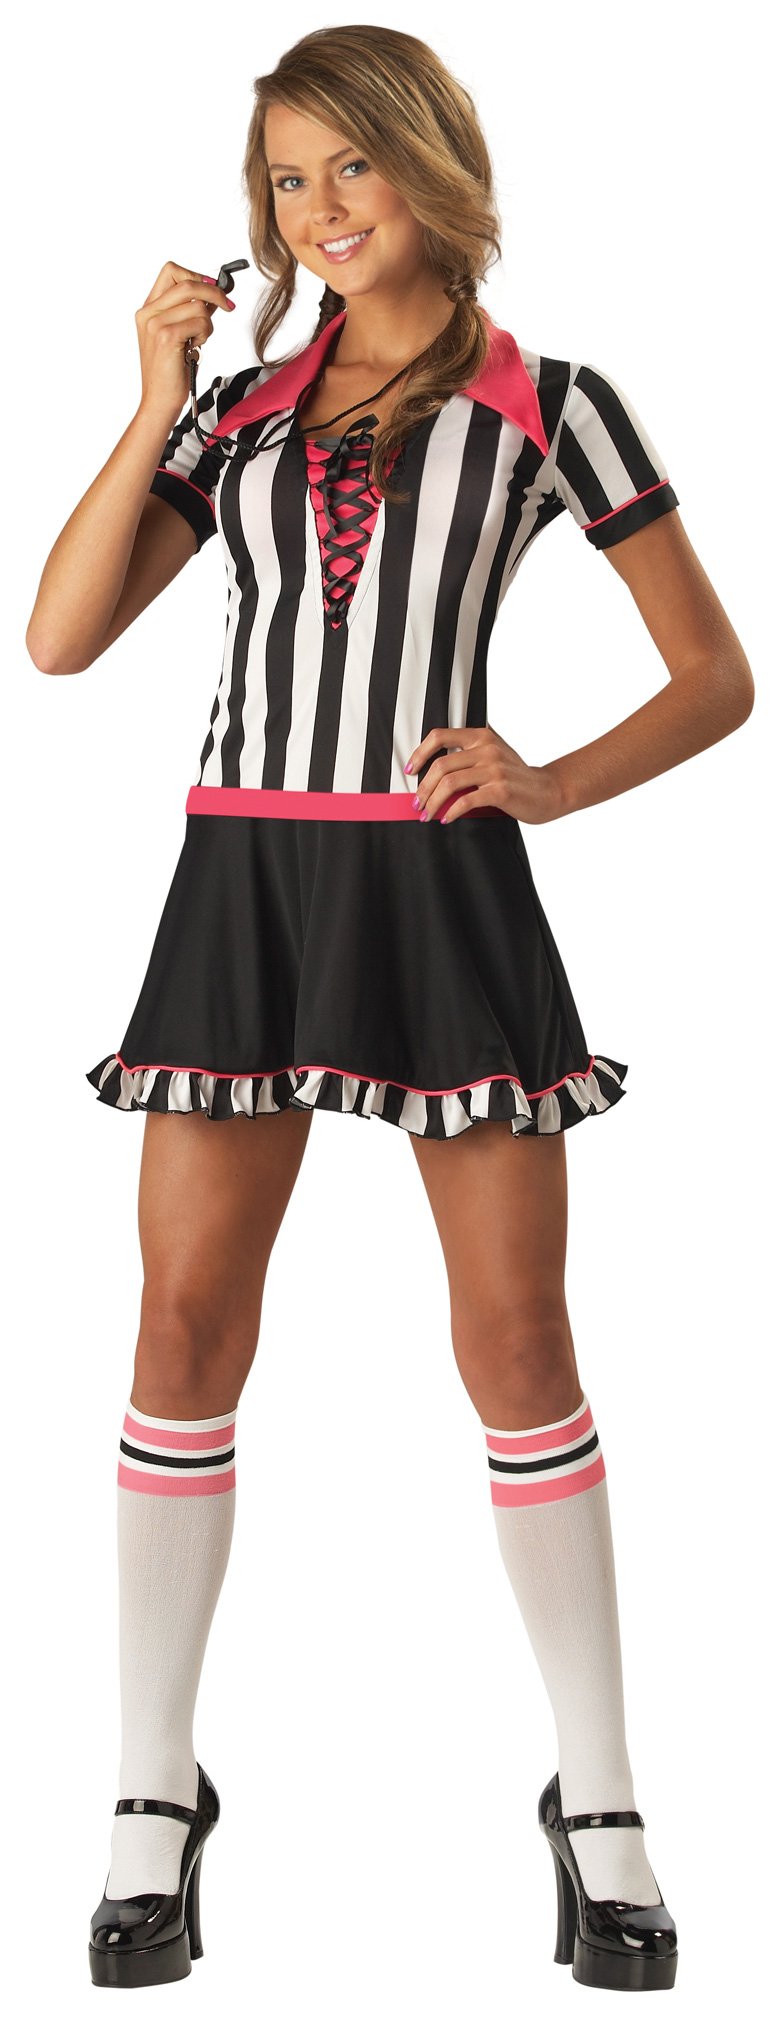 Rebellious Referee Teen Costume